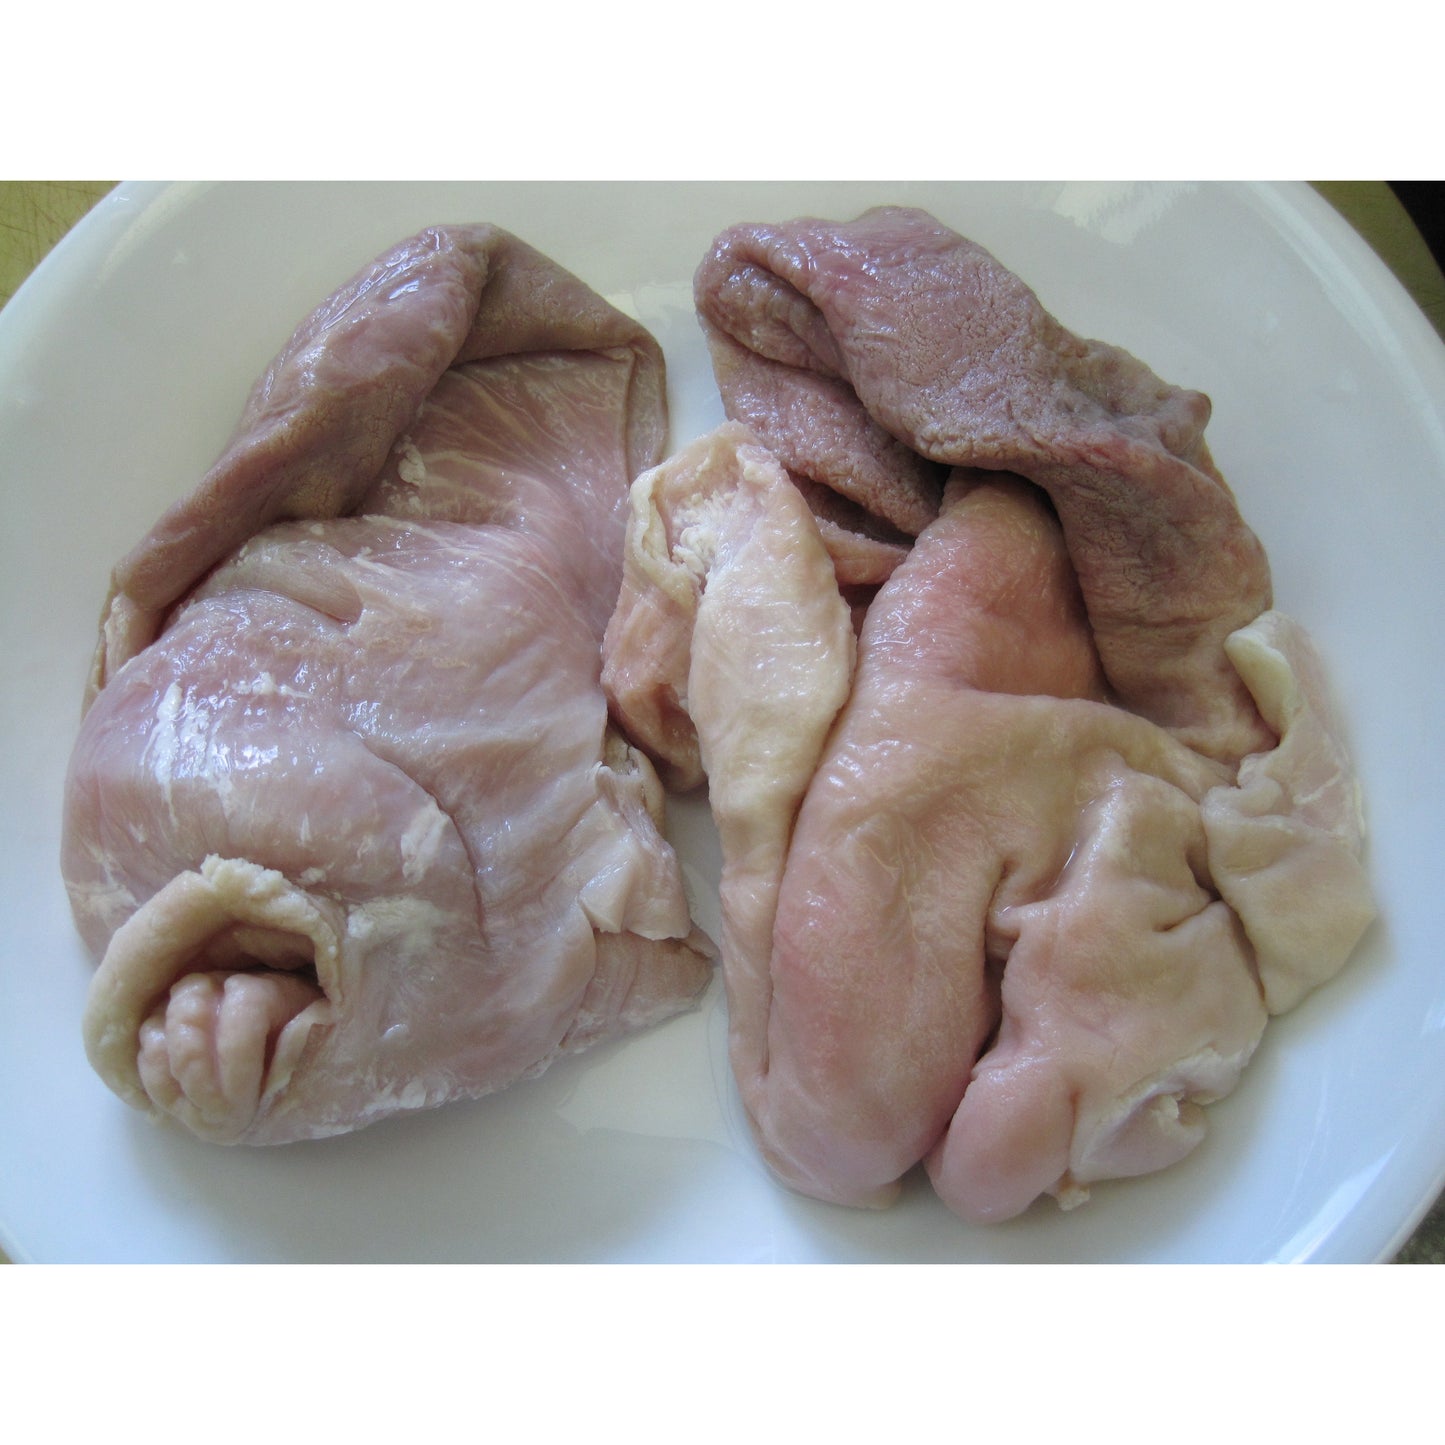 Pork - pork belly [approximately 1.25-1.5 lbs]